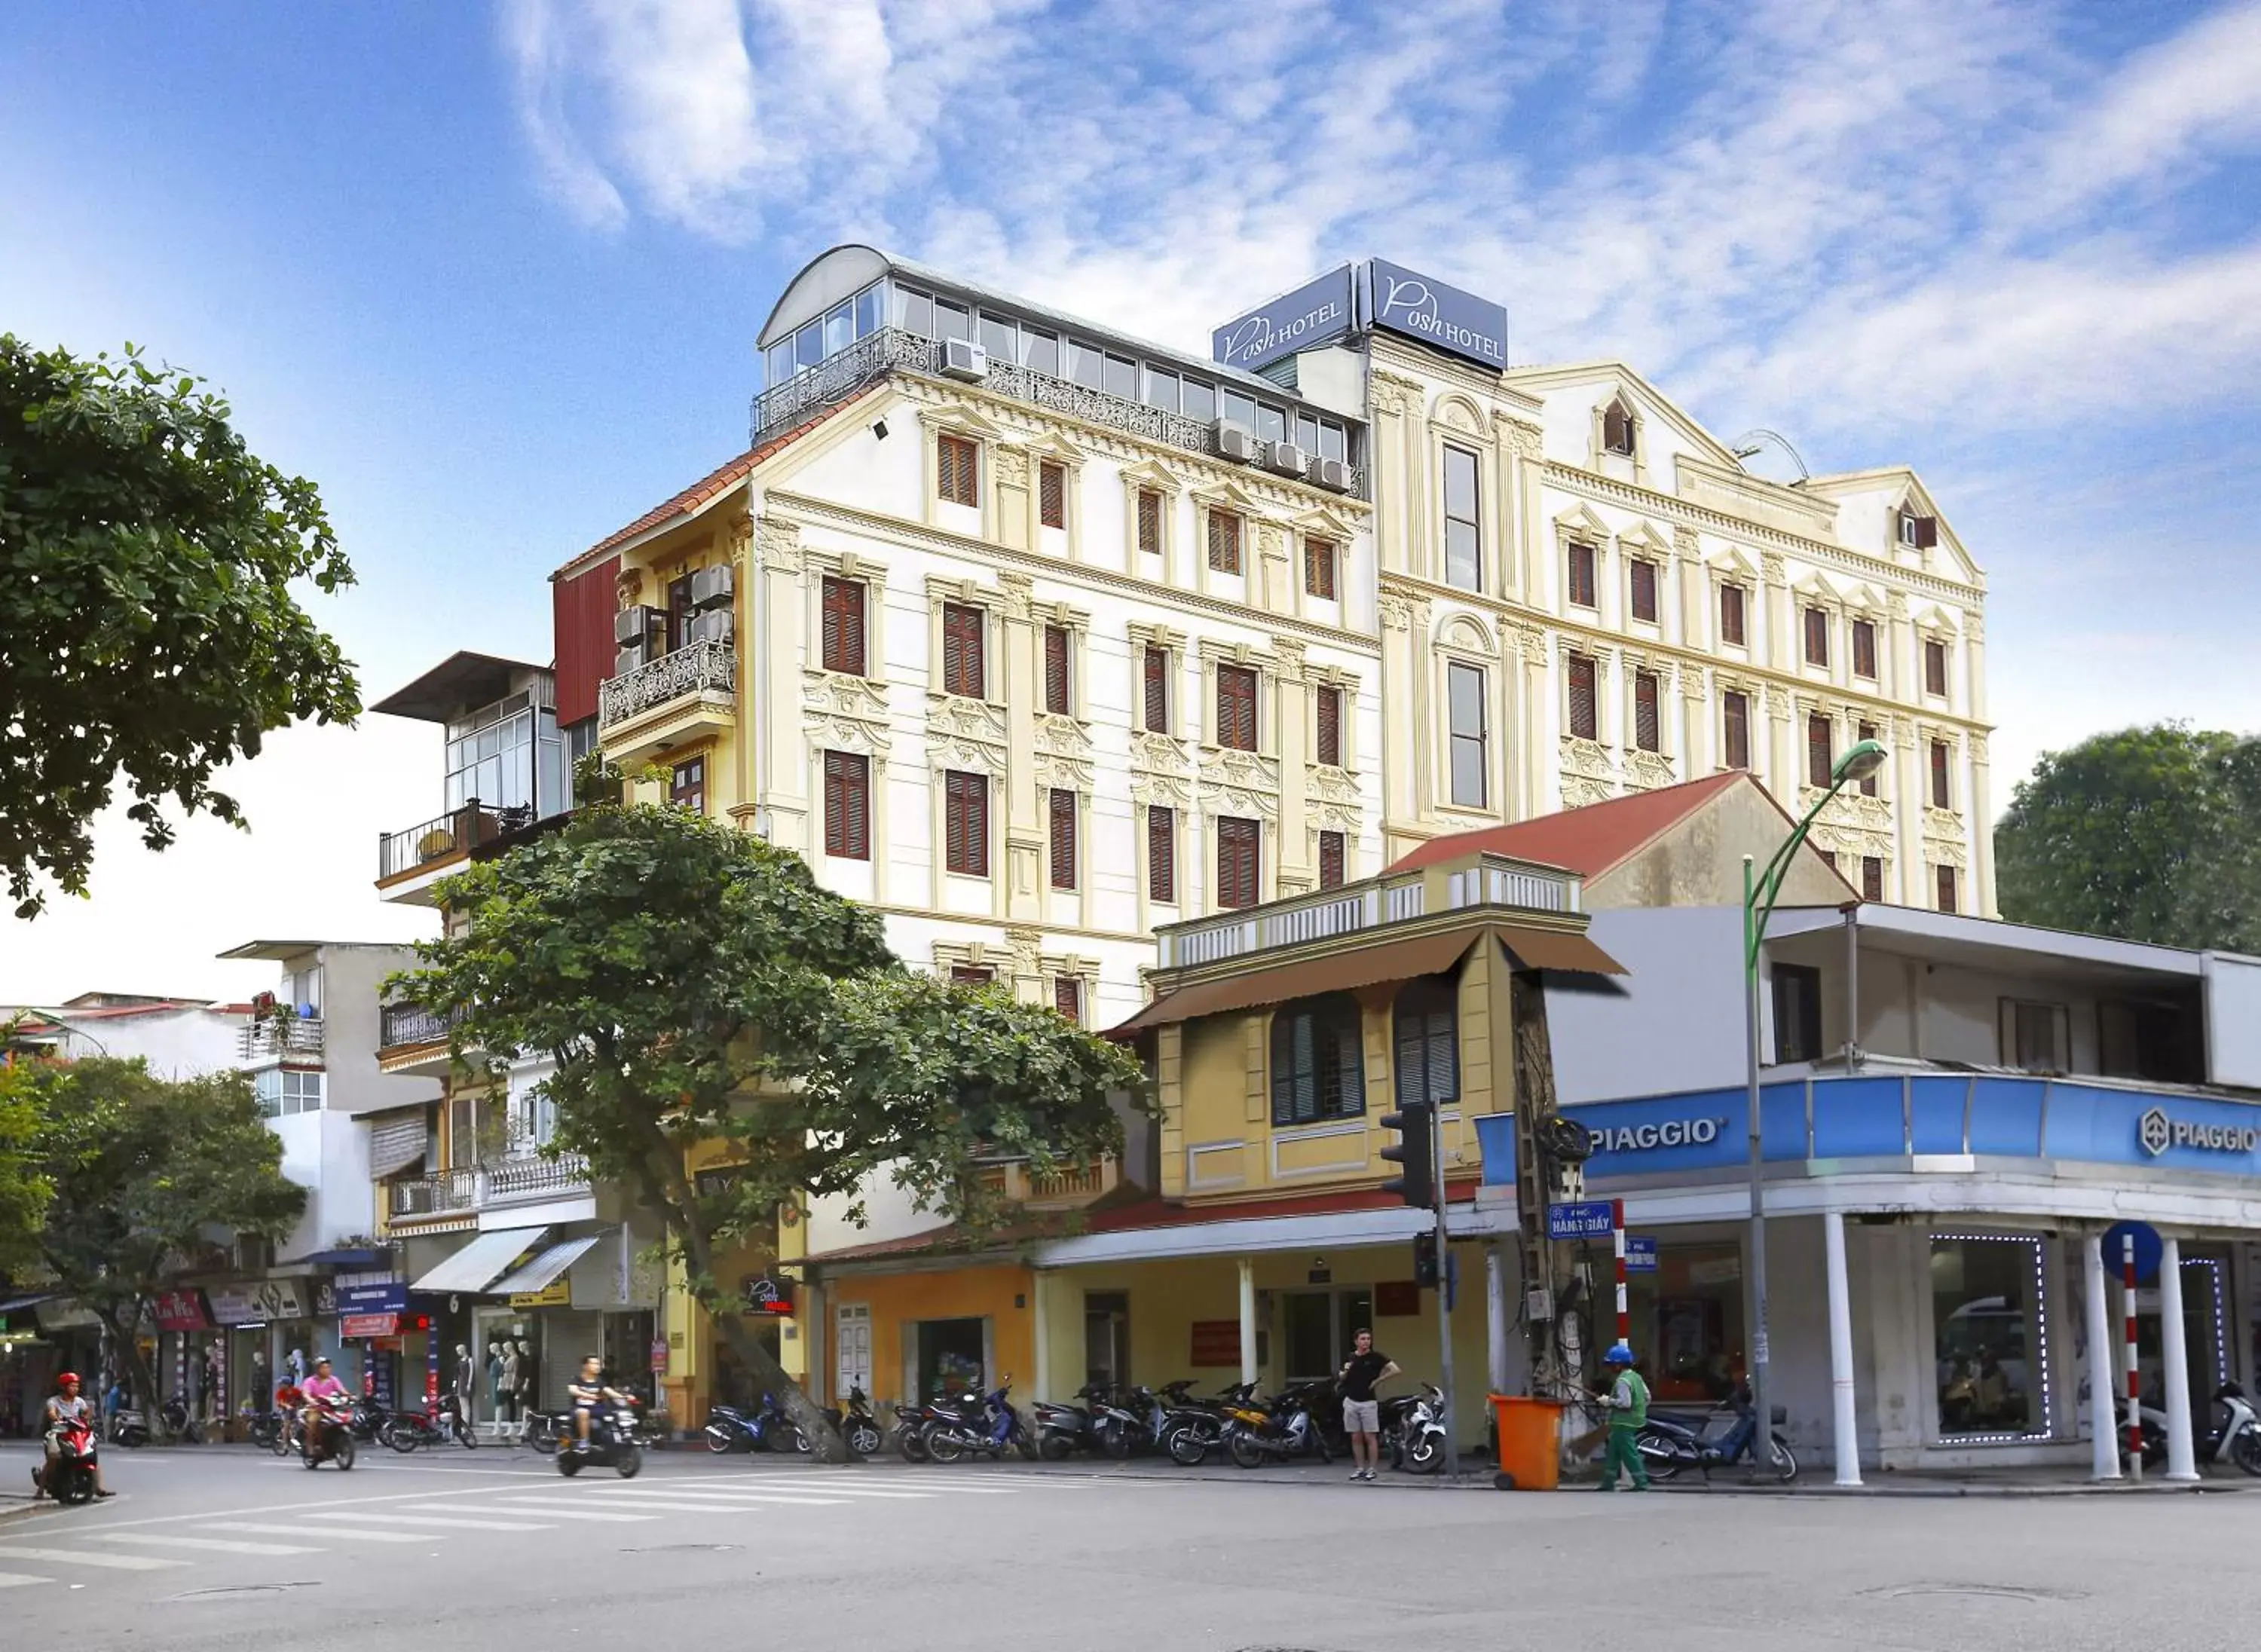 Off site, Property Building in Hanoi Posh Boutique Hotel